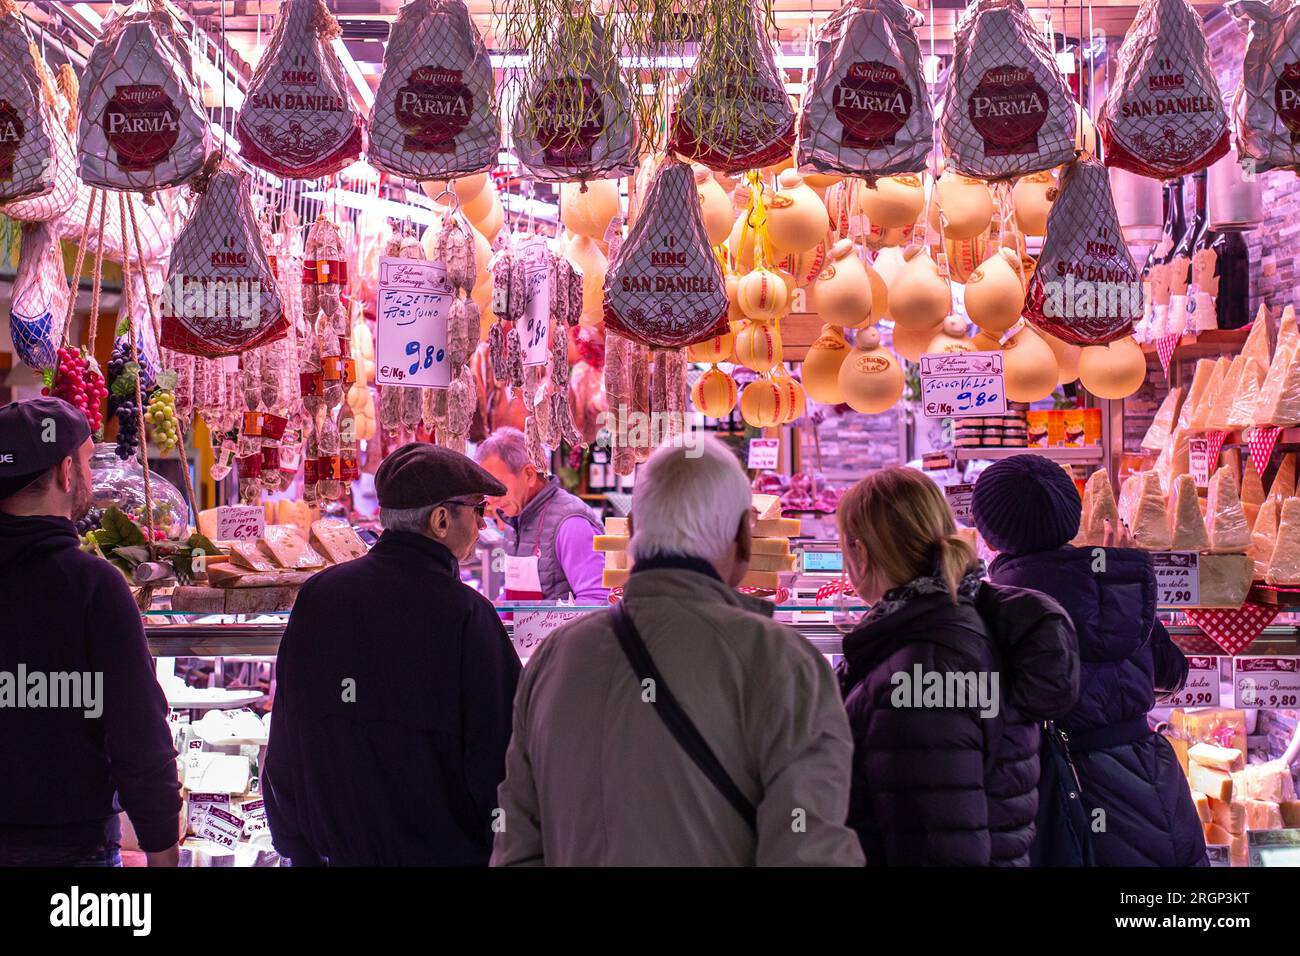 TURIN, ITALY - NOVEMBER 10, 2018: People at the local traditional market at Porta Palazzo in Turin, Italy. Stock Photo